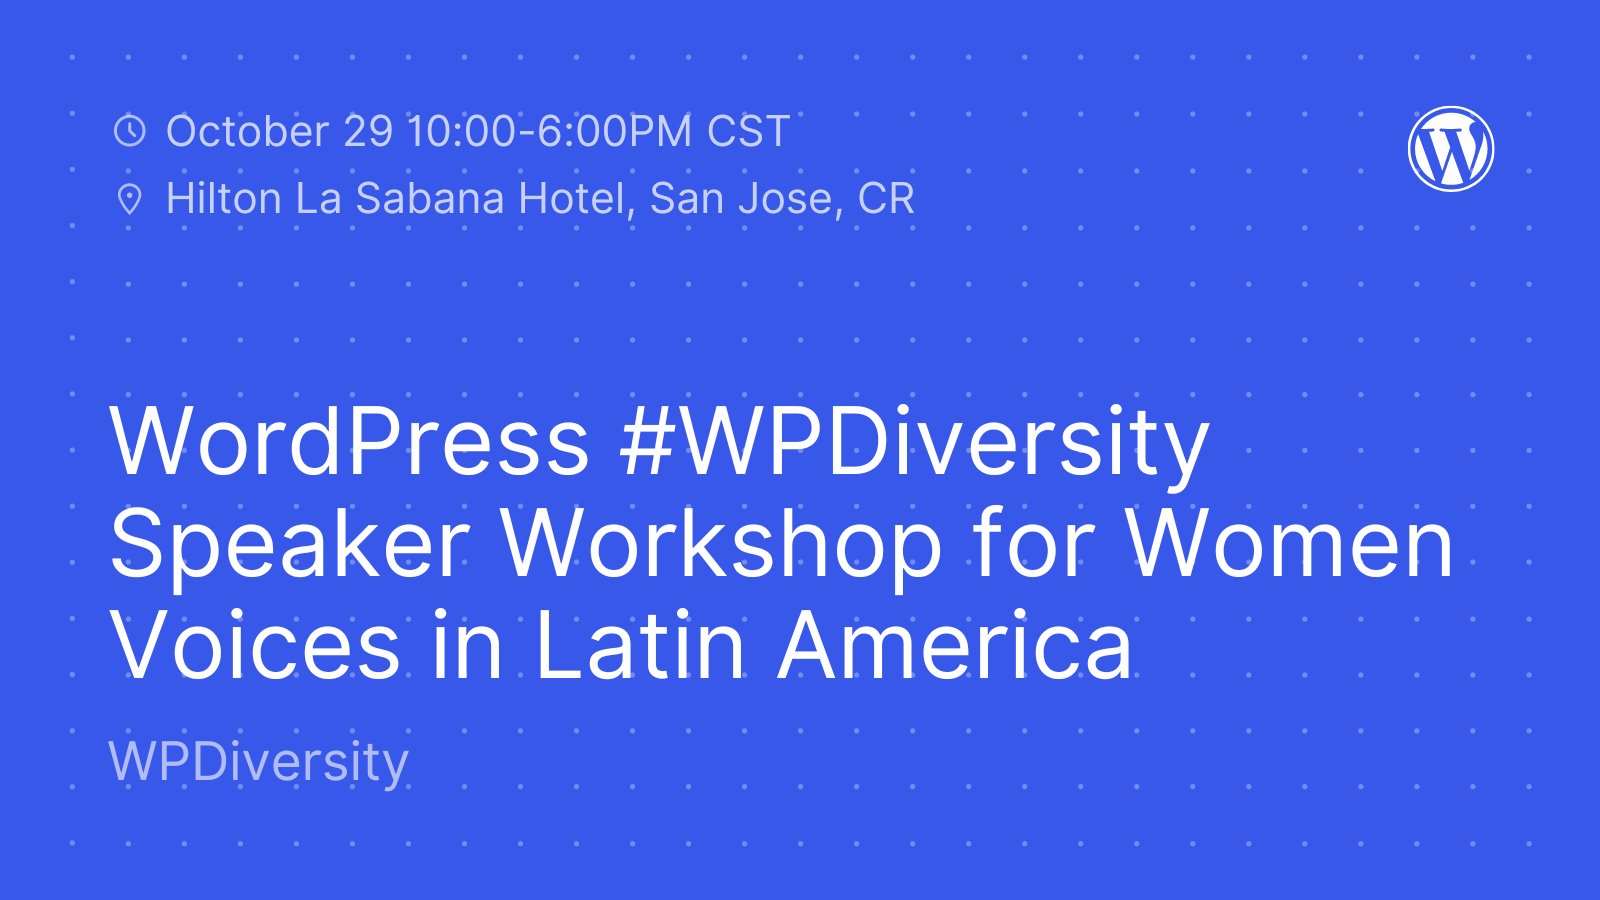 Blue background image with white dot pattern and white WordPress logo. Text: "October 29 10:00-6:00PM CST. Hilton La Sabana Hotel, San Jose, CR. WordPress #WPDiversity Speaker Workshop for Women Voice in Latin America."